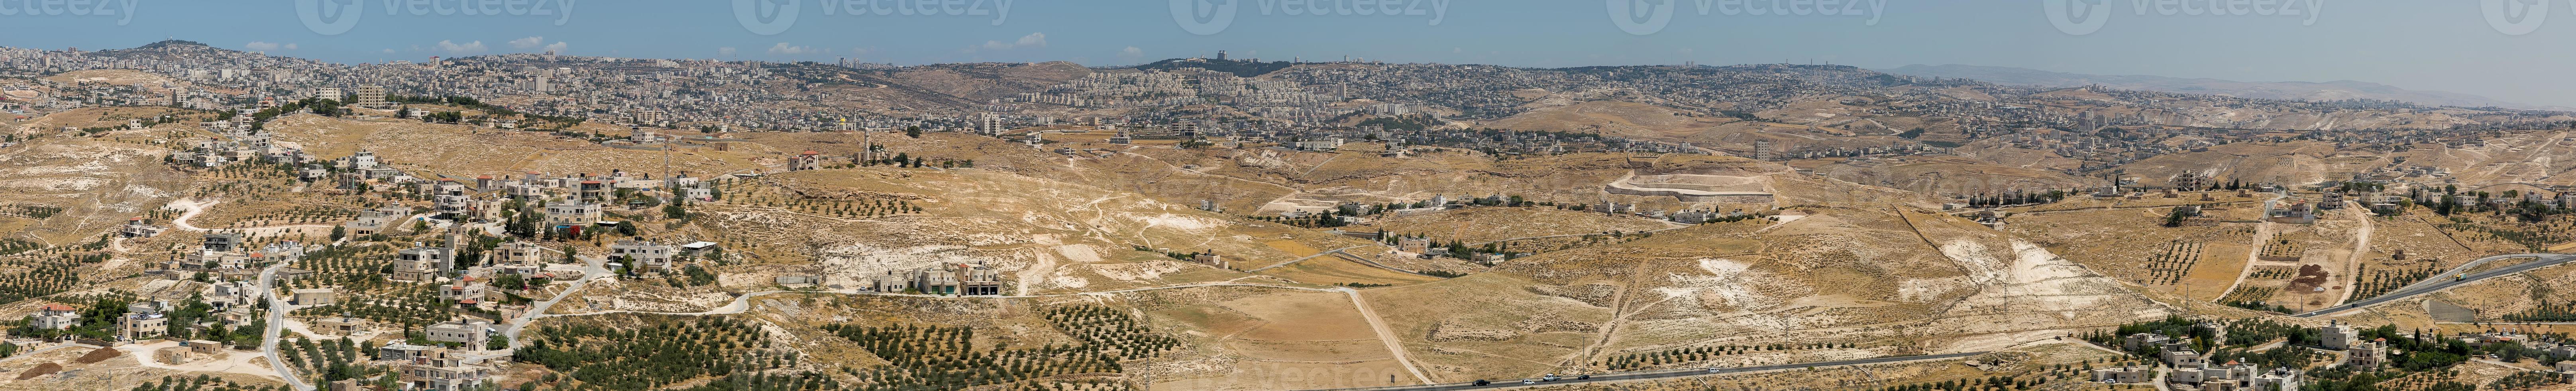 Landscape in Israel photo